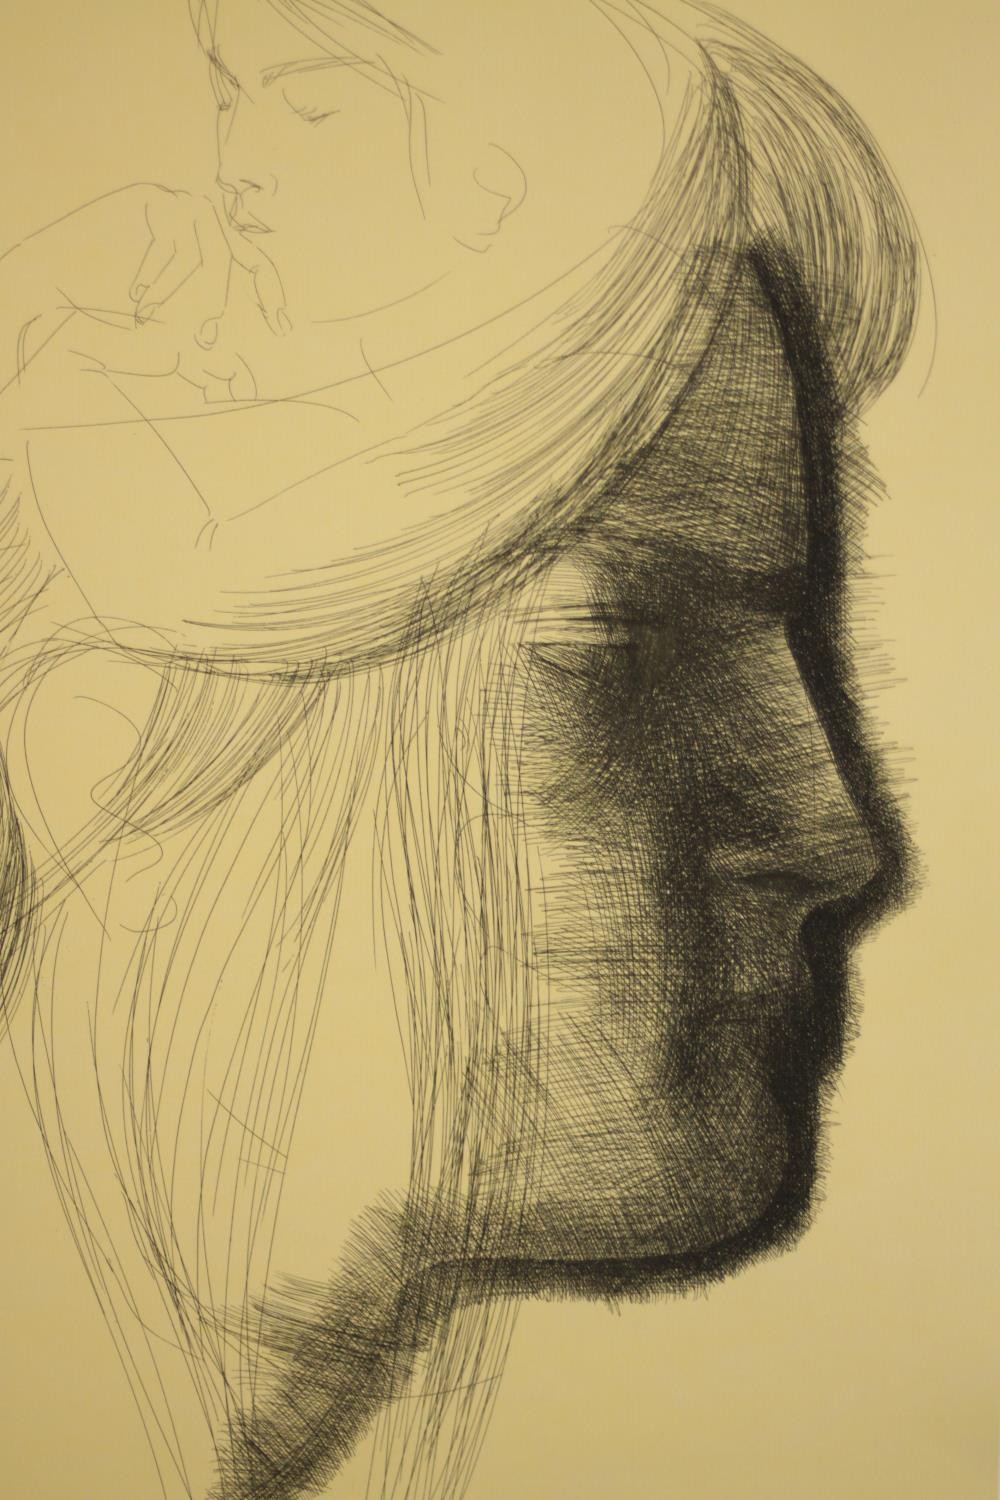 Emilio Greco (Italian 1913-1995), Ommagio a Michelangelo, limited edition (135/200) pencil signed